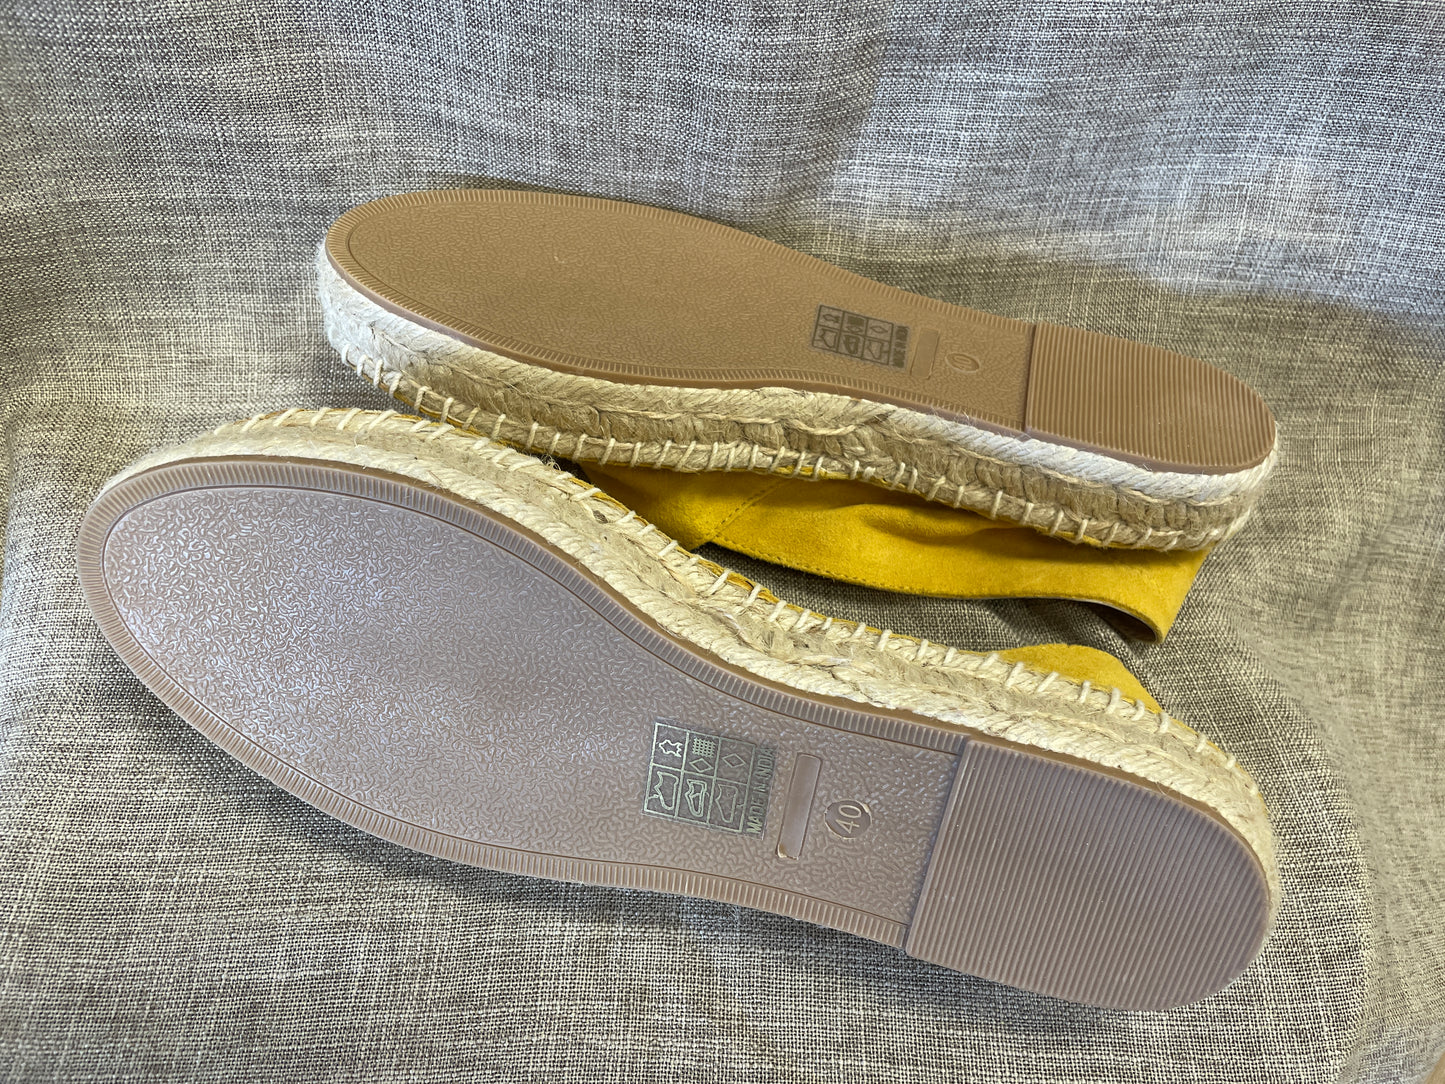 New KG Kurt Geiger Yellow Suede Espadrille Flat Slip on Shoes UK 7